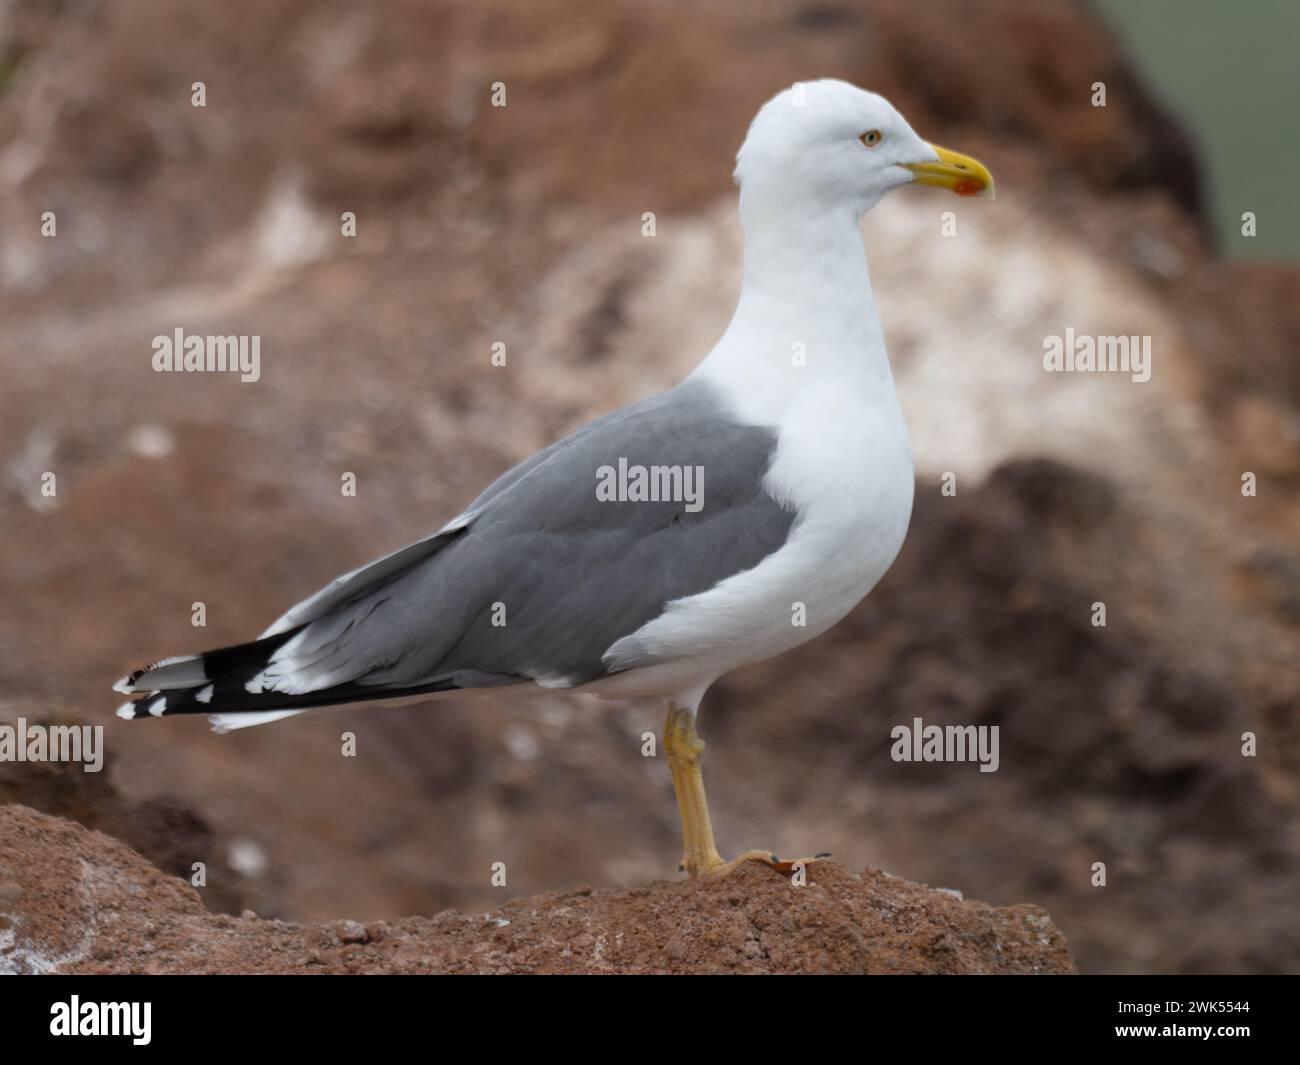 A close up of a yellow-legged gull, Larus michahellis, perch on rocks. Stock Photo